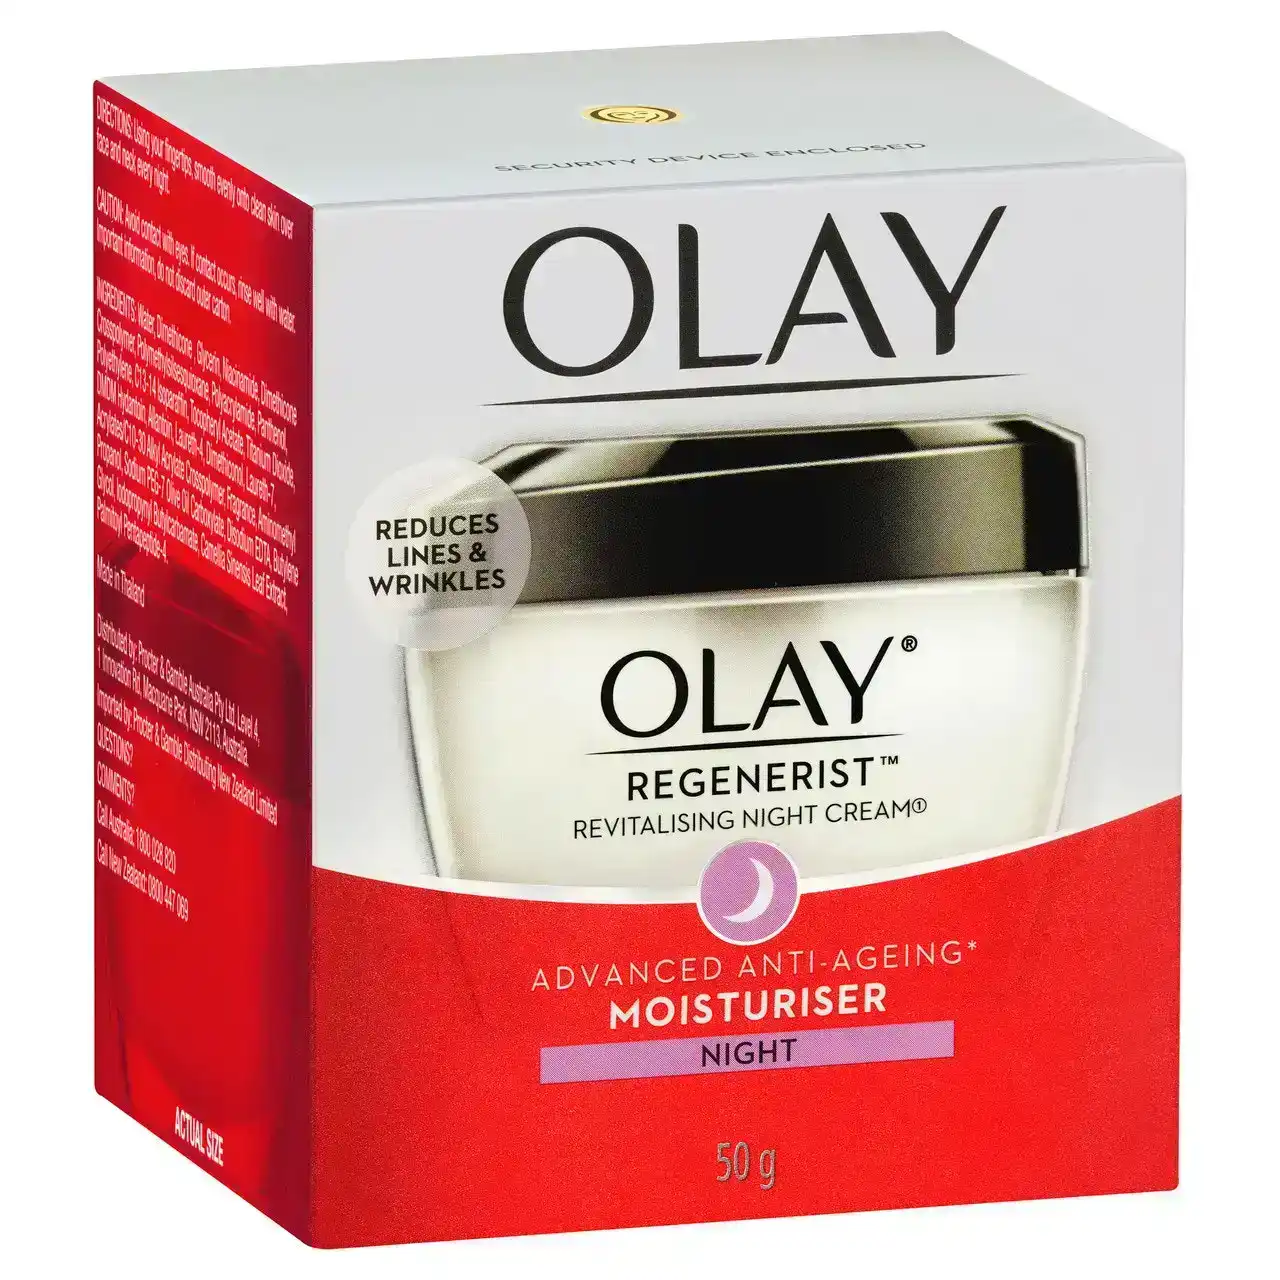 Olay Regenerist Revitalising Night Face Cream Moisturiser 50g